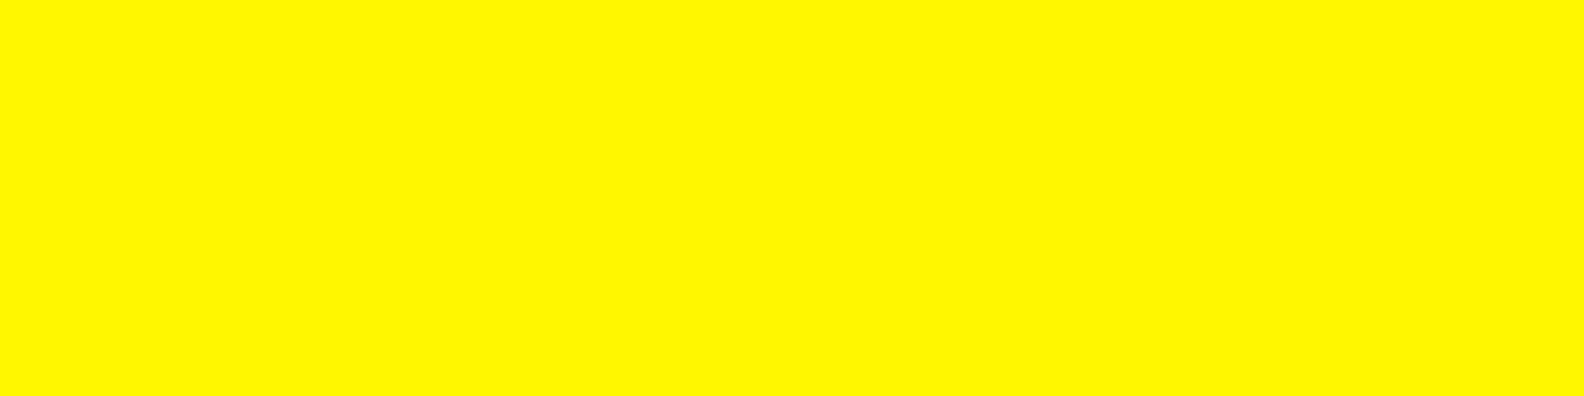 1584x396 Lemon Solid Color Background